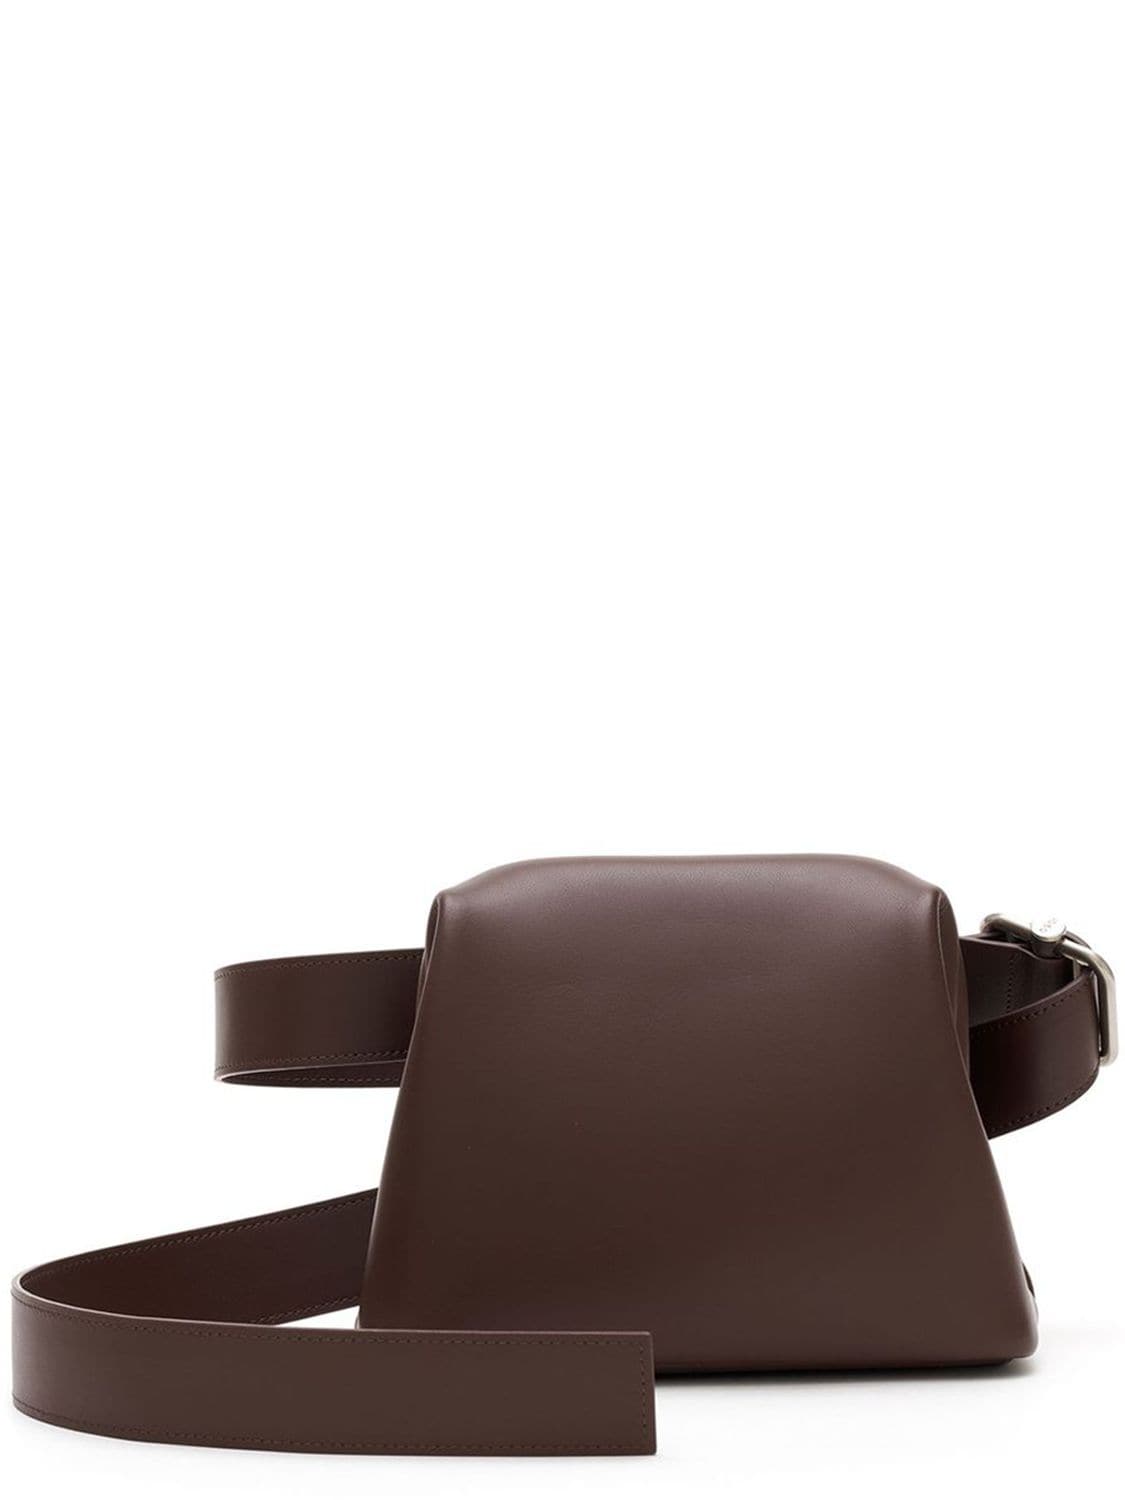 Osoi Mini Brot Leather Shoulder Bag In Choco Brown